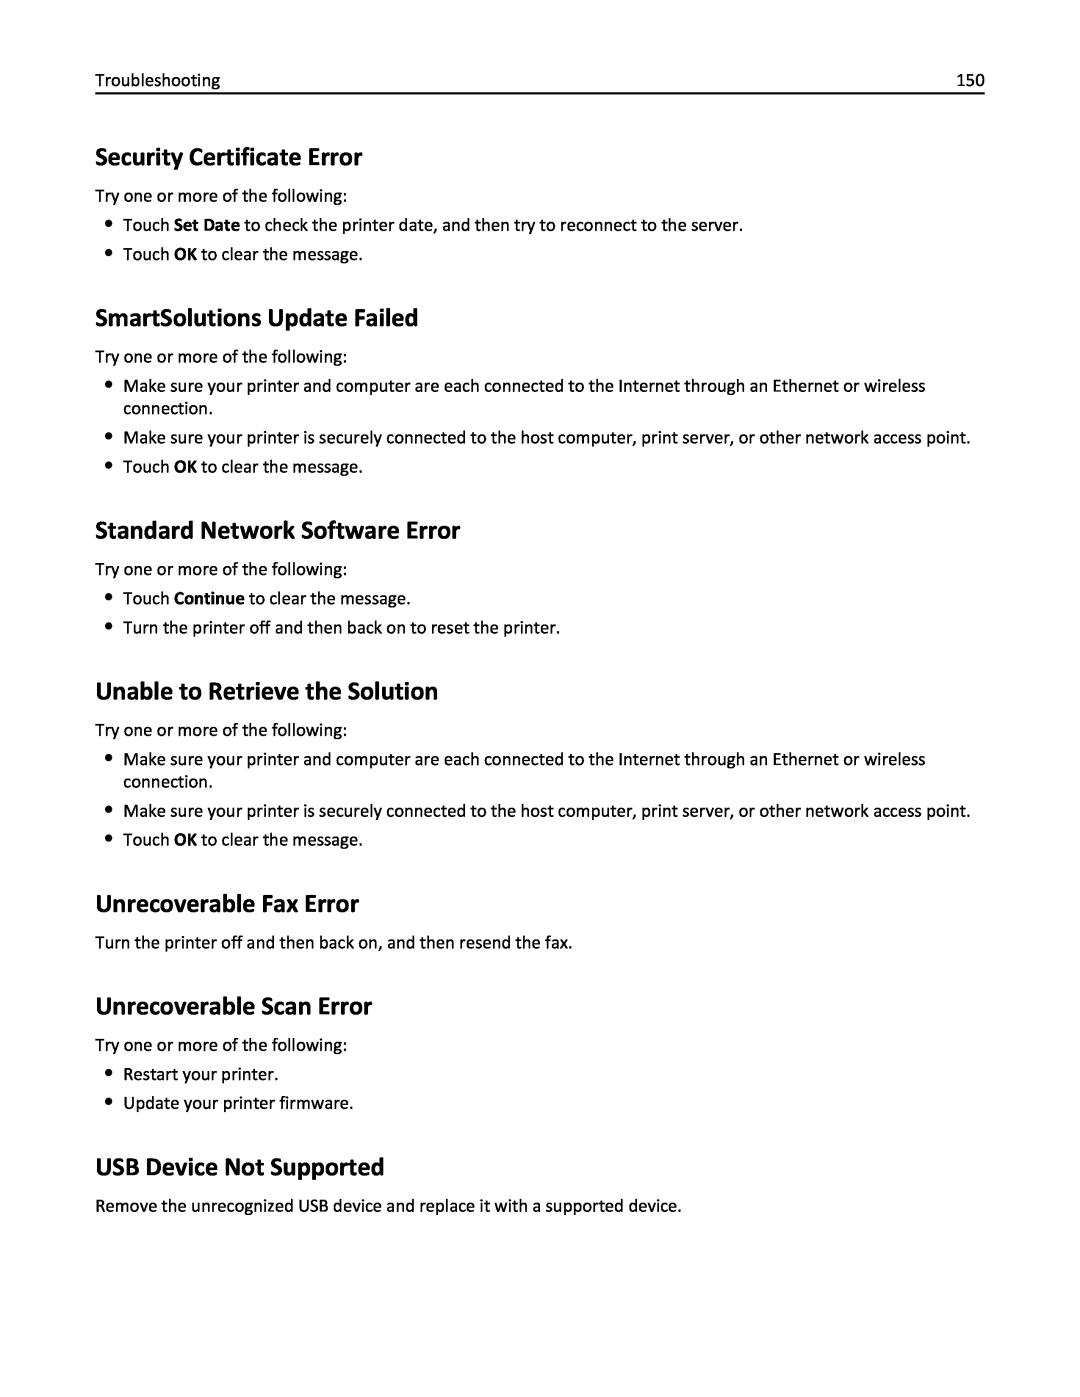 Lexmark 20E, 200 manual Security Certificate Error, SmartSolutions Update Failed, Standard Network Software Error 